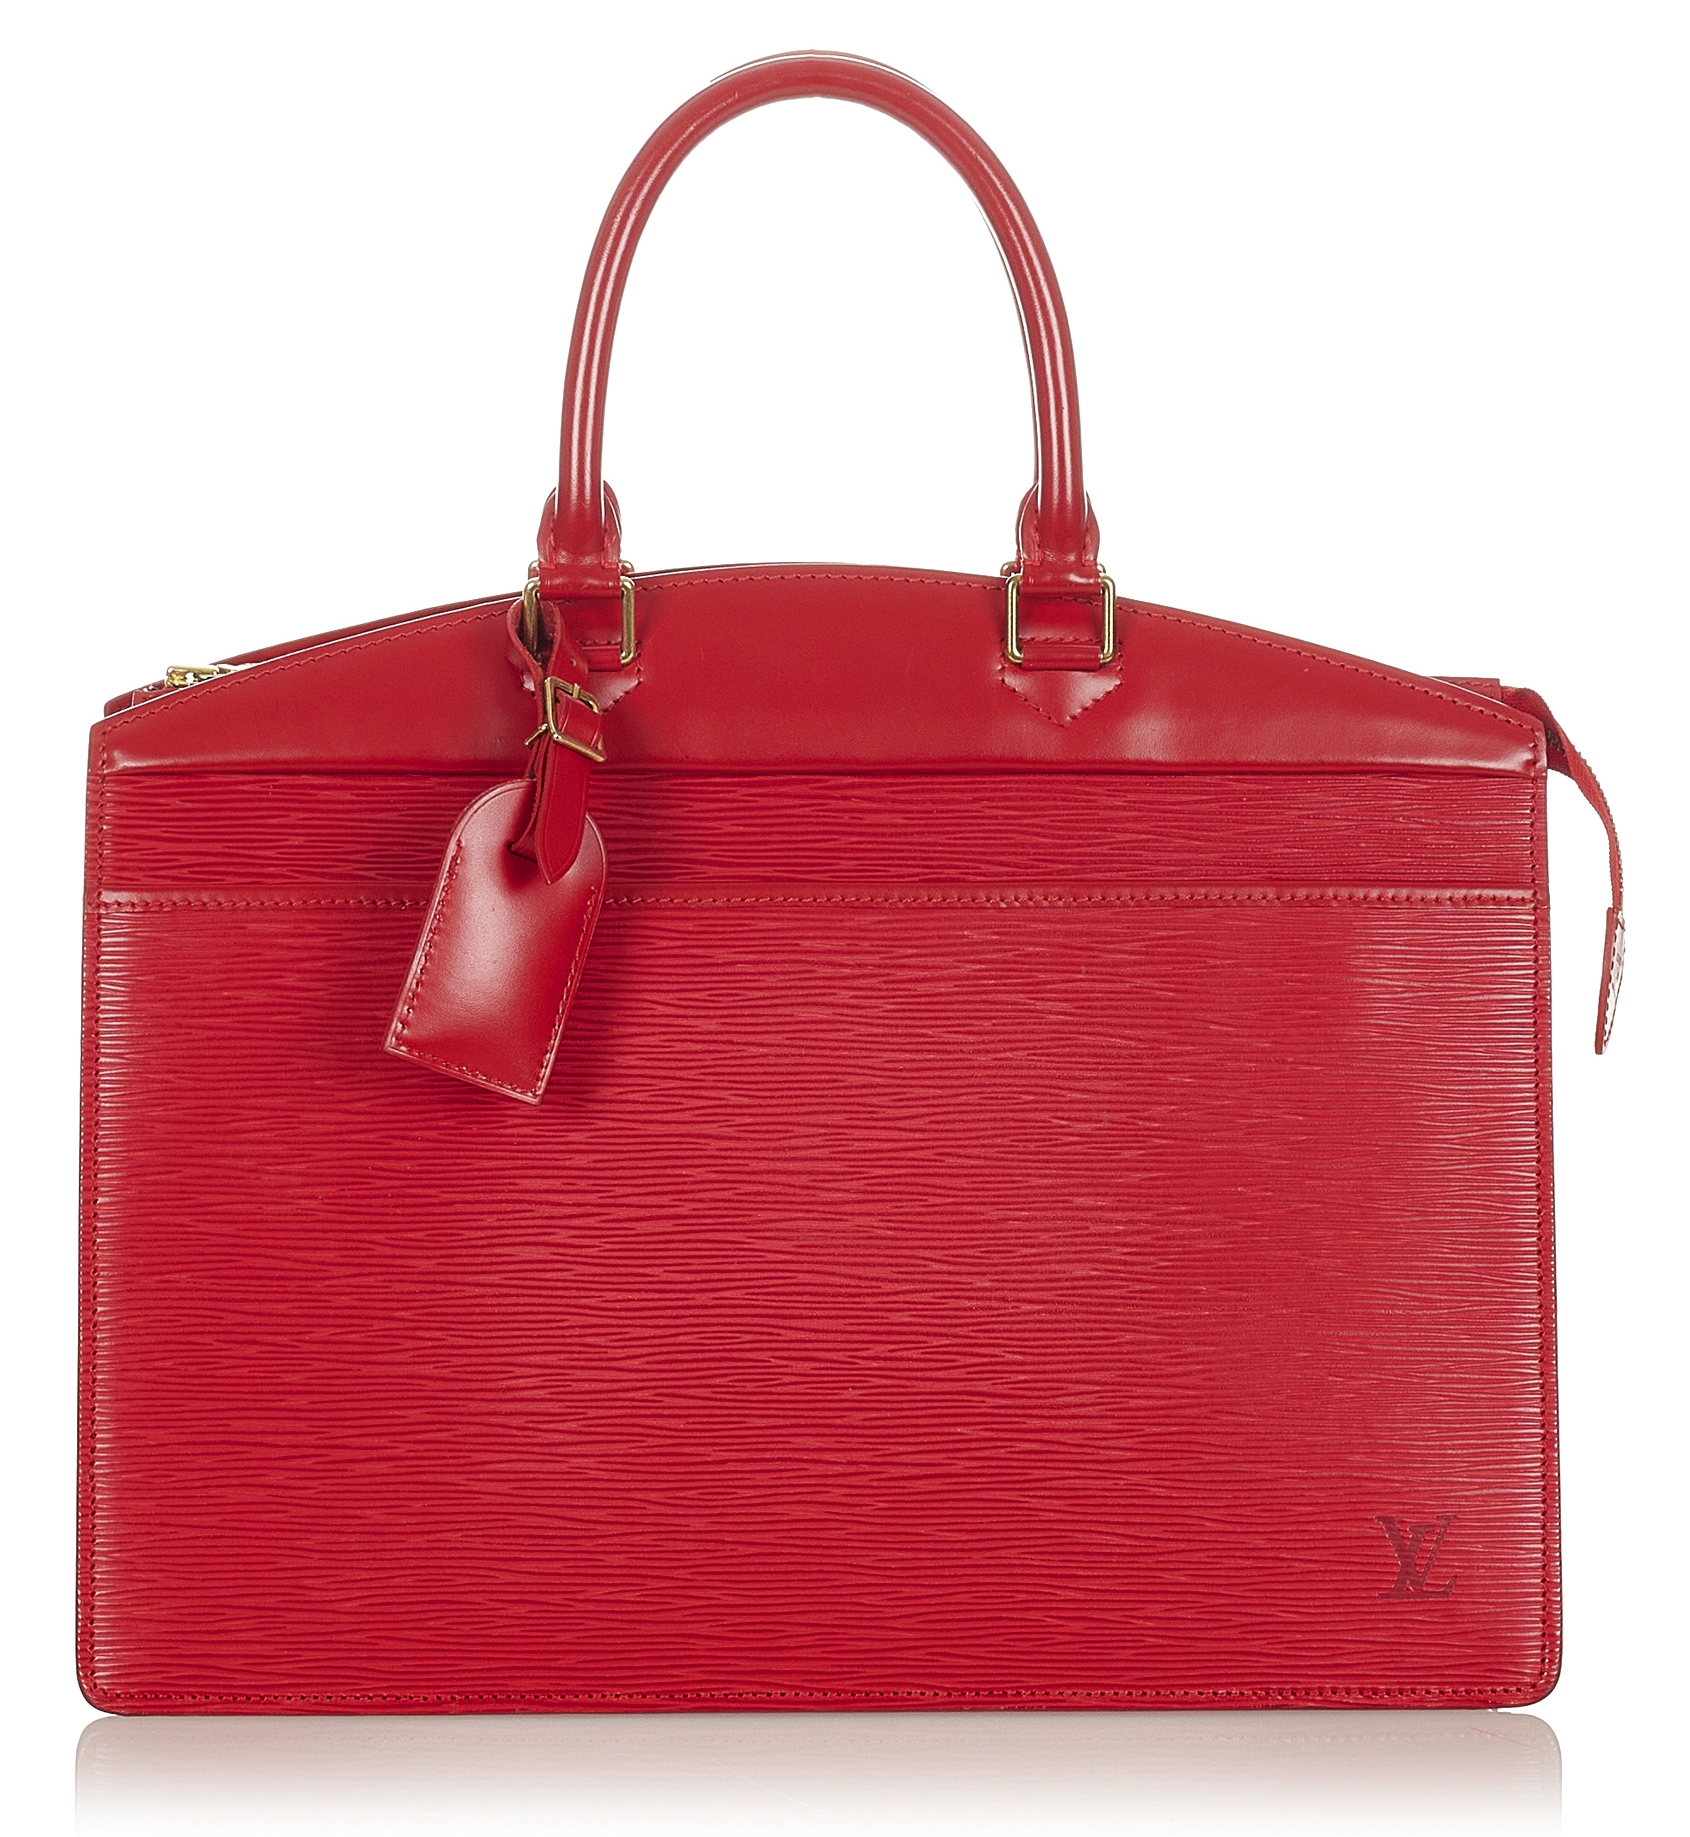 Louis Vuitton Riviera Epi Leather Top Handle Bag on SALE